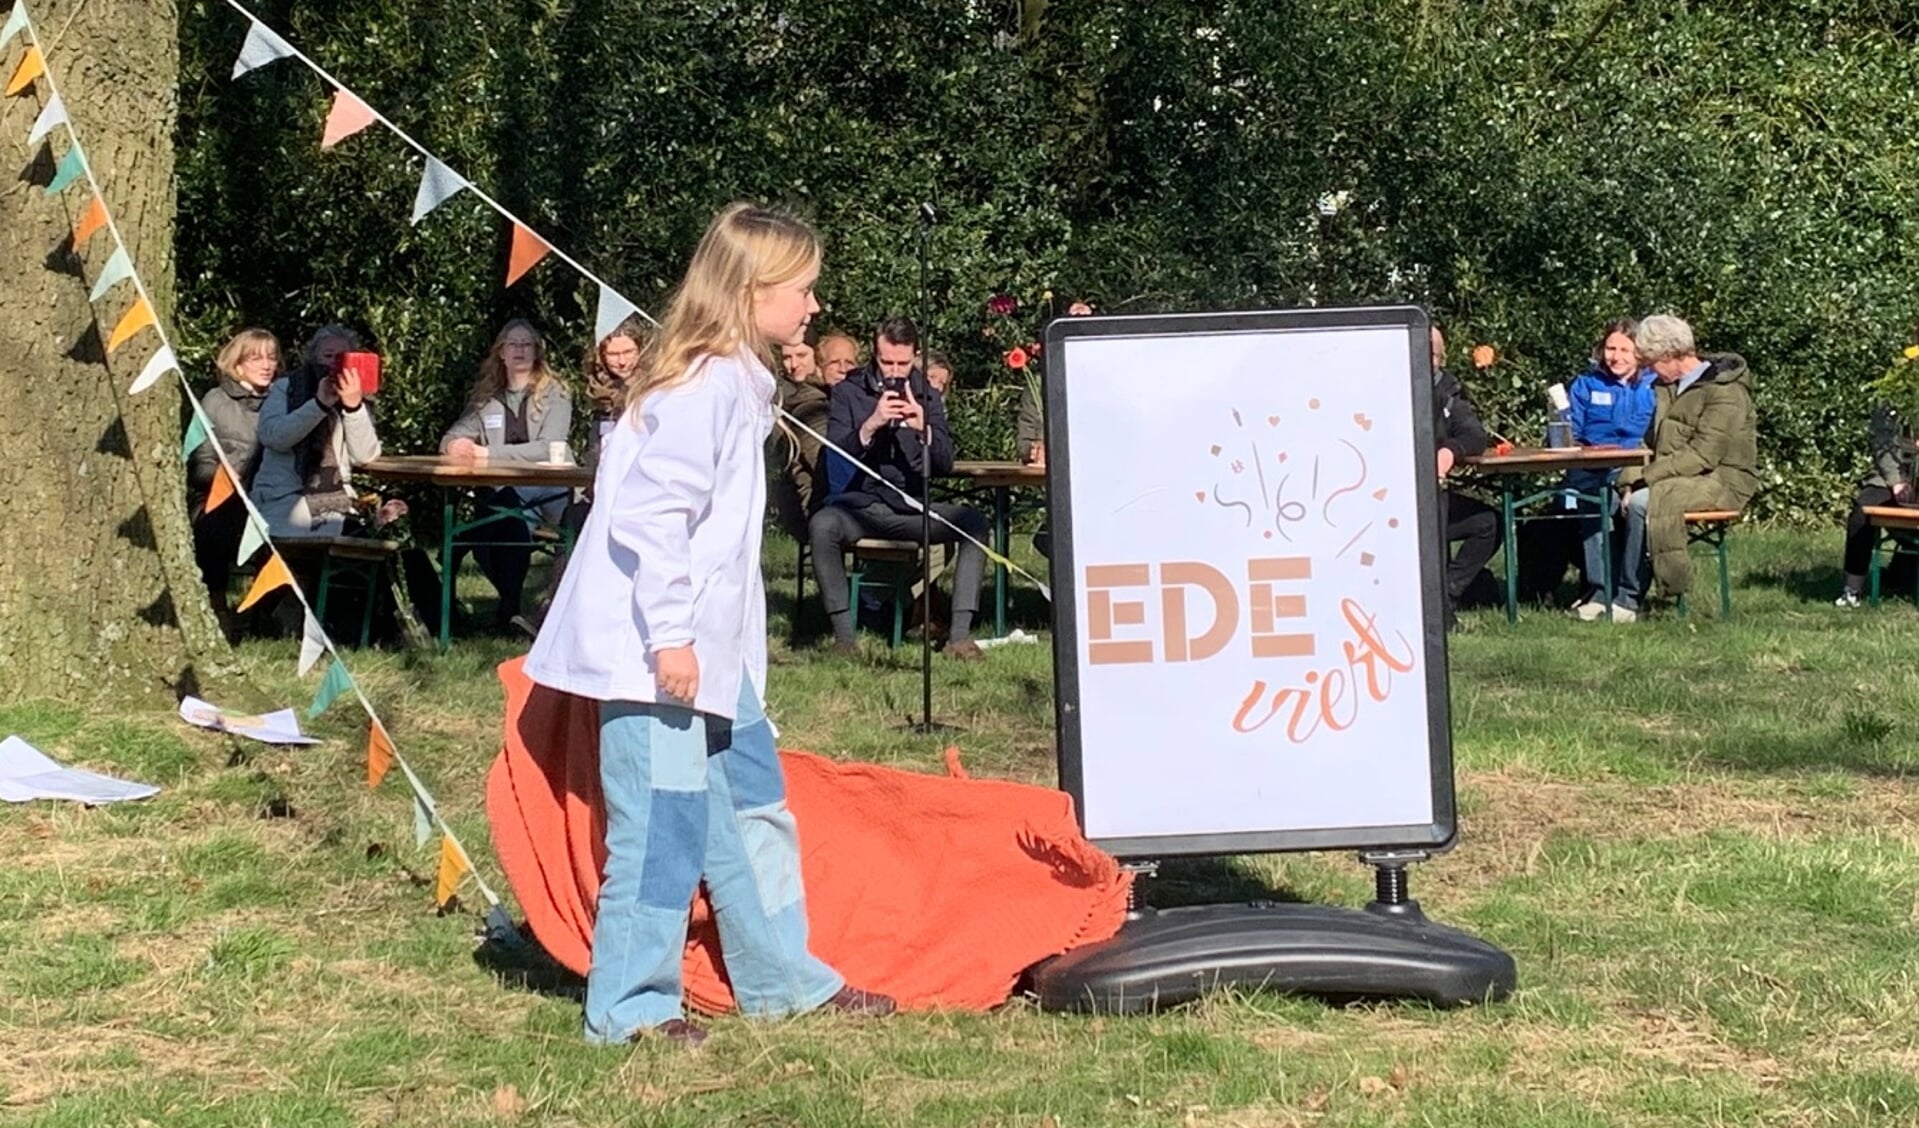 Kinderwethouder Sophie Westerveld onthult het logo van de campagne 'Ede viert'